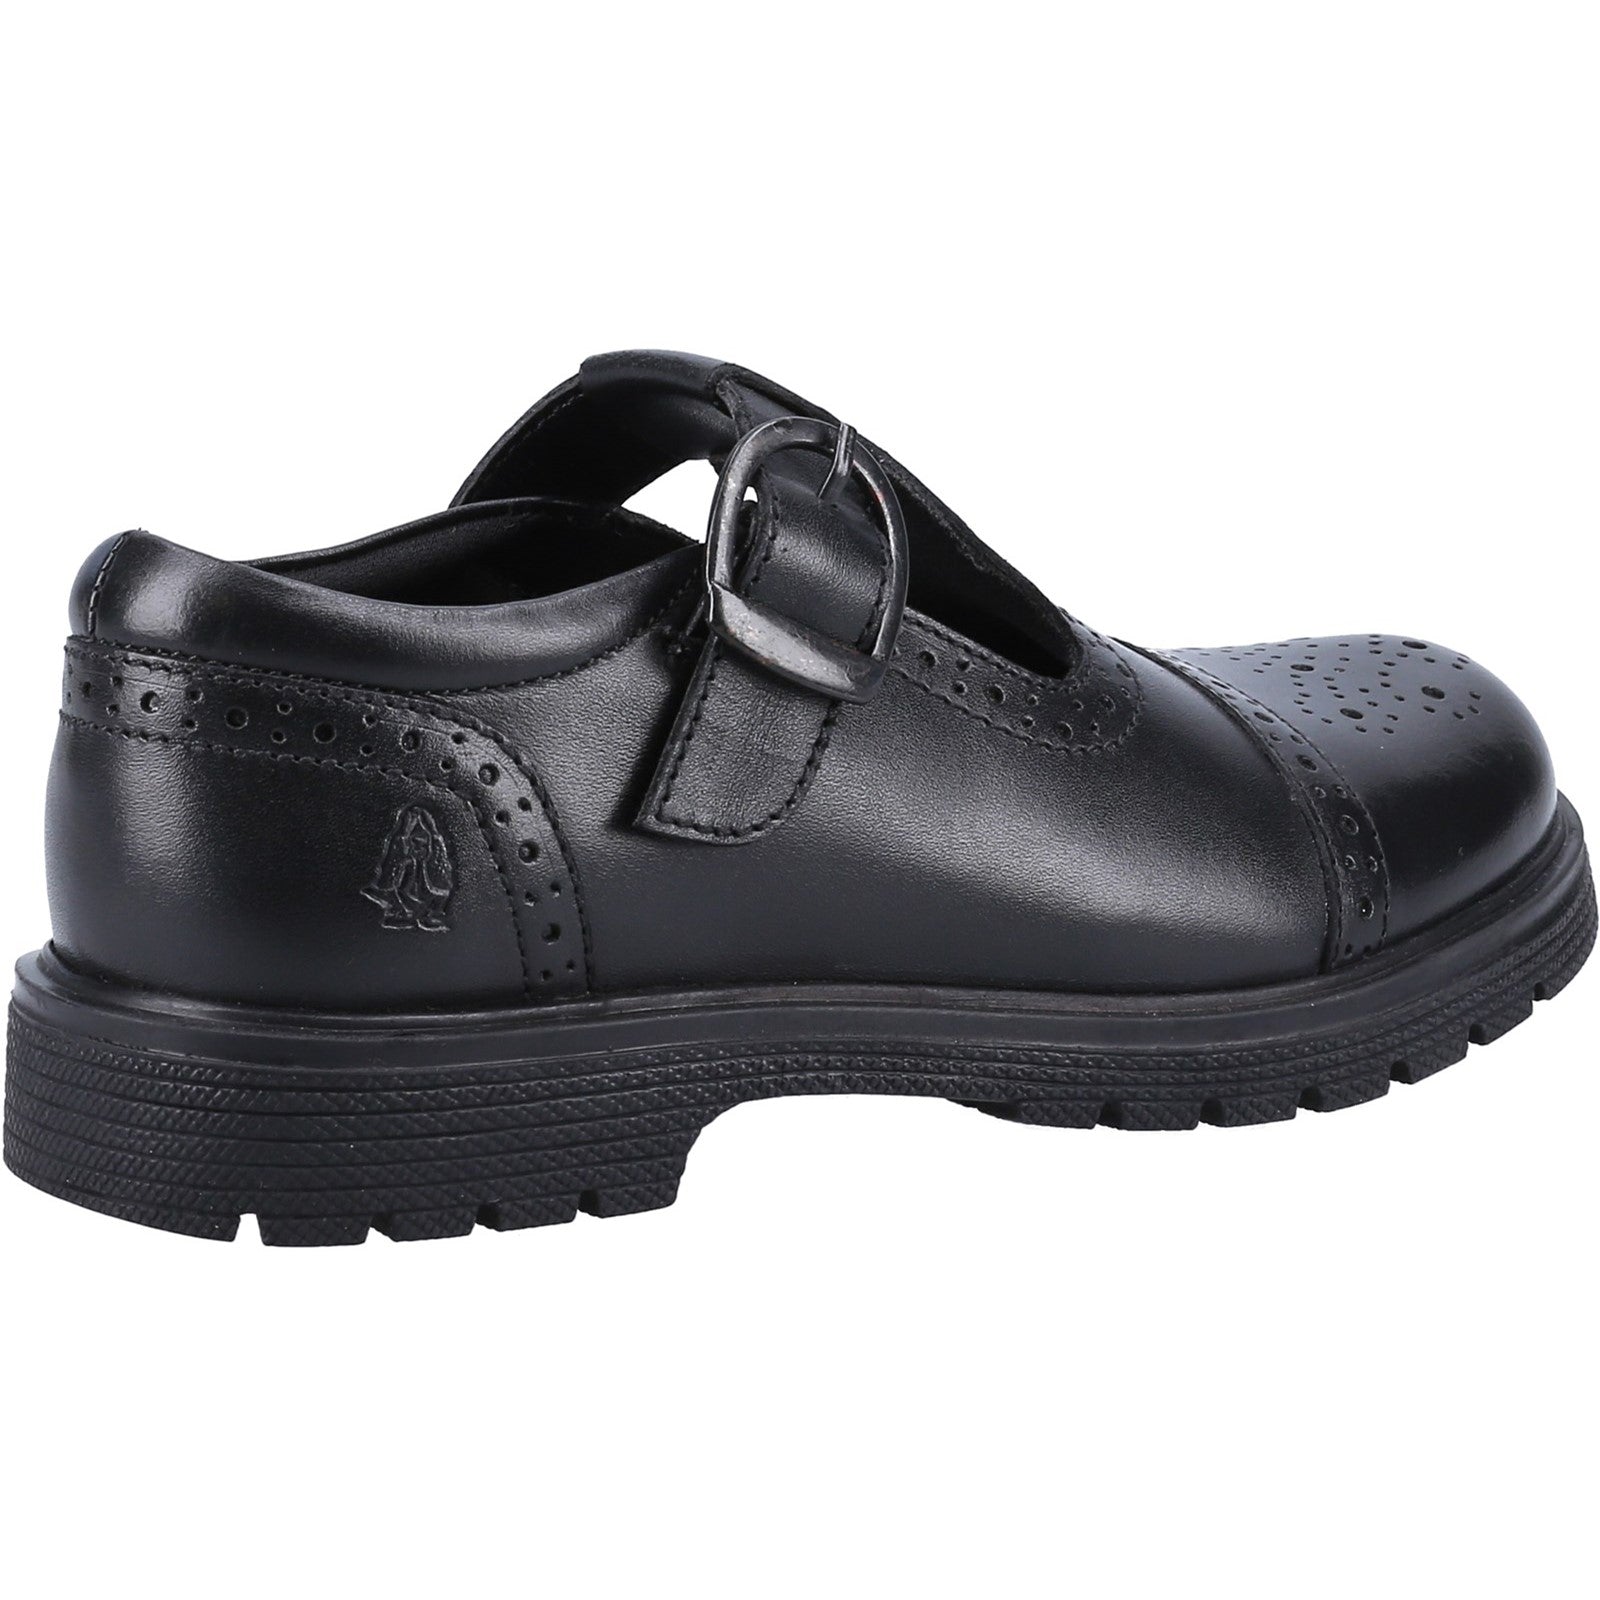 Hush Puppies Girls Paloma Leather School Shoes - Black